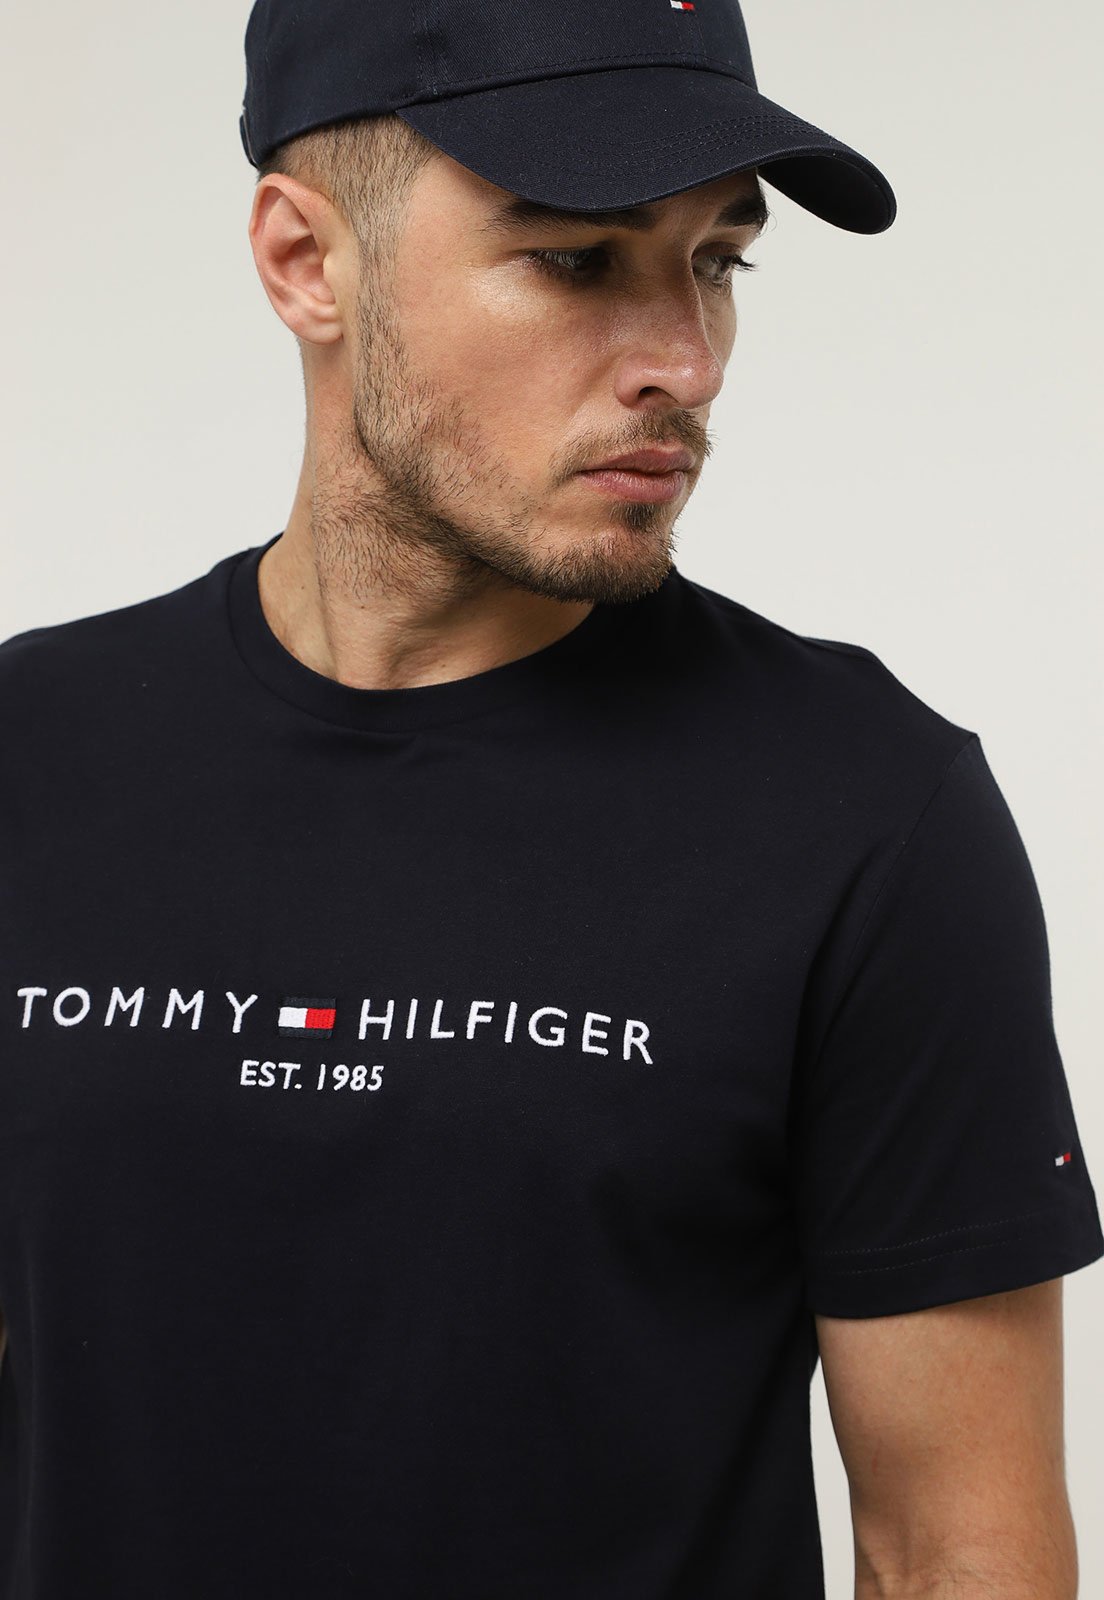 https://static.dafiti.com.br/p/Tommy-Hilfiger-Camiseta-Tommy-Hilfiger-Logo-Azul-Marinho-2774-08617031-1-zoom.jpg